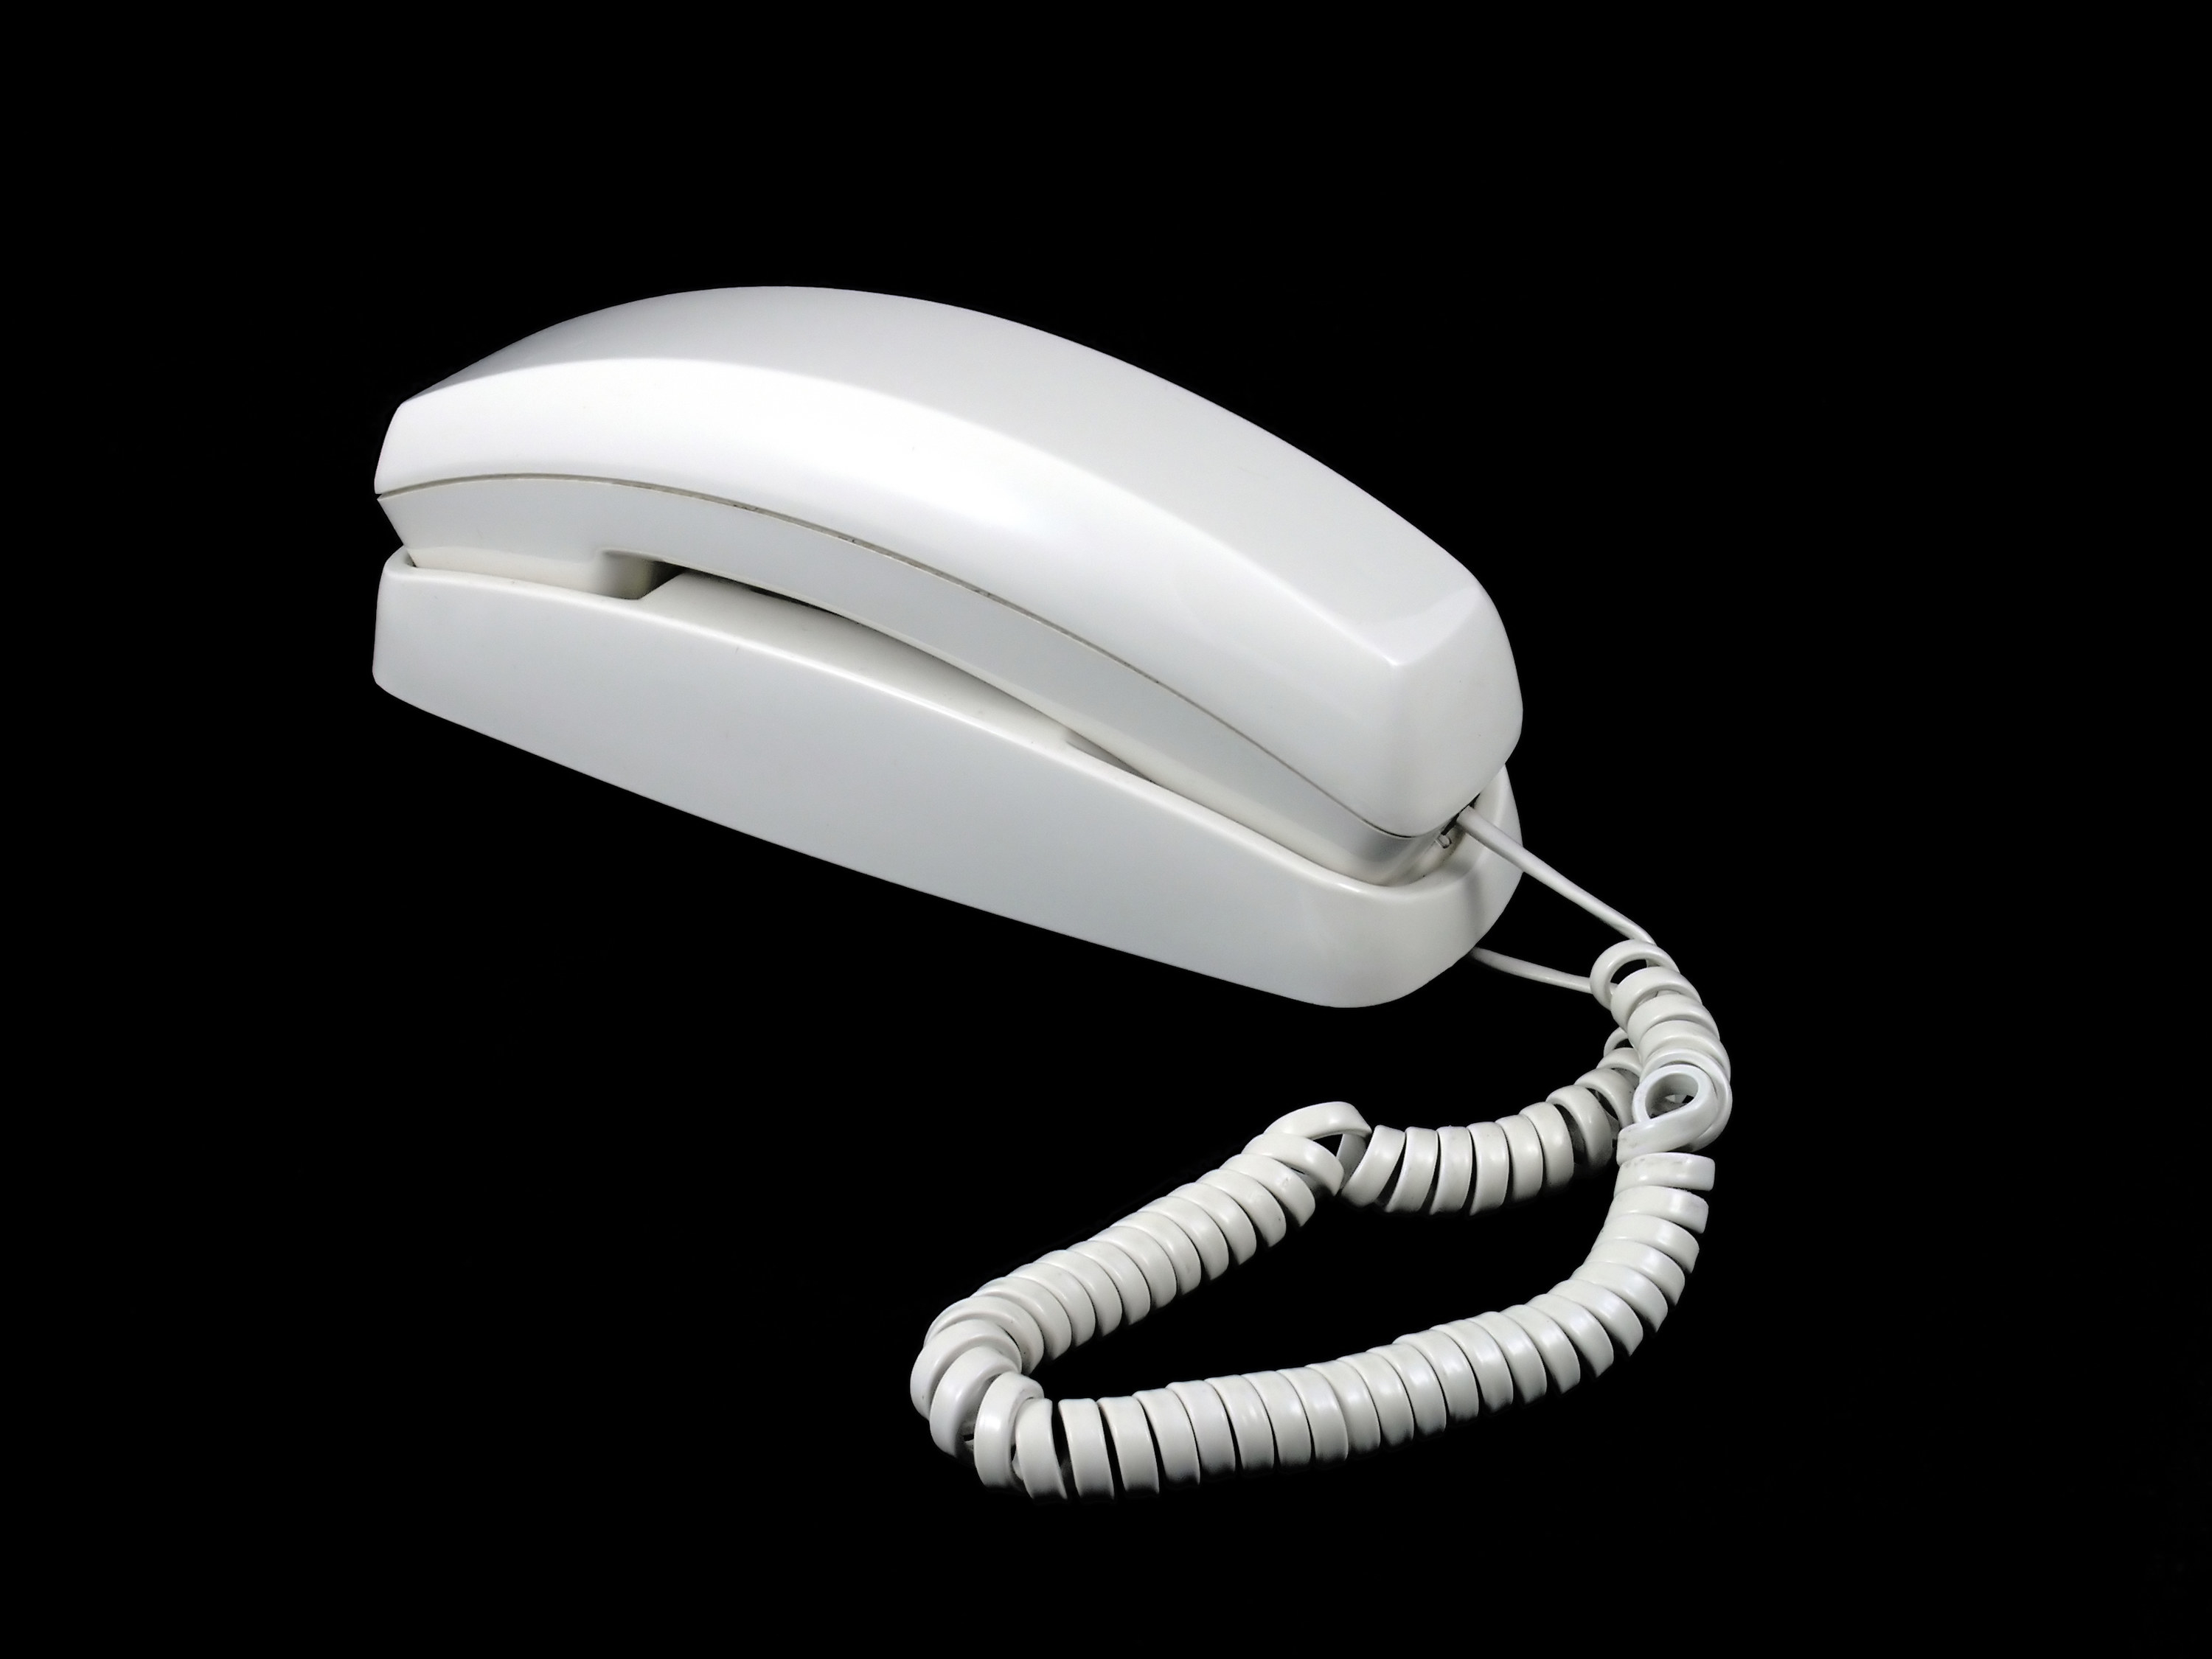 An older landline phone